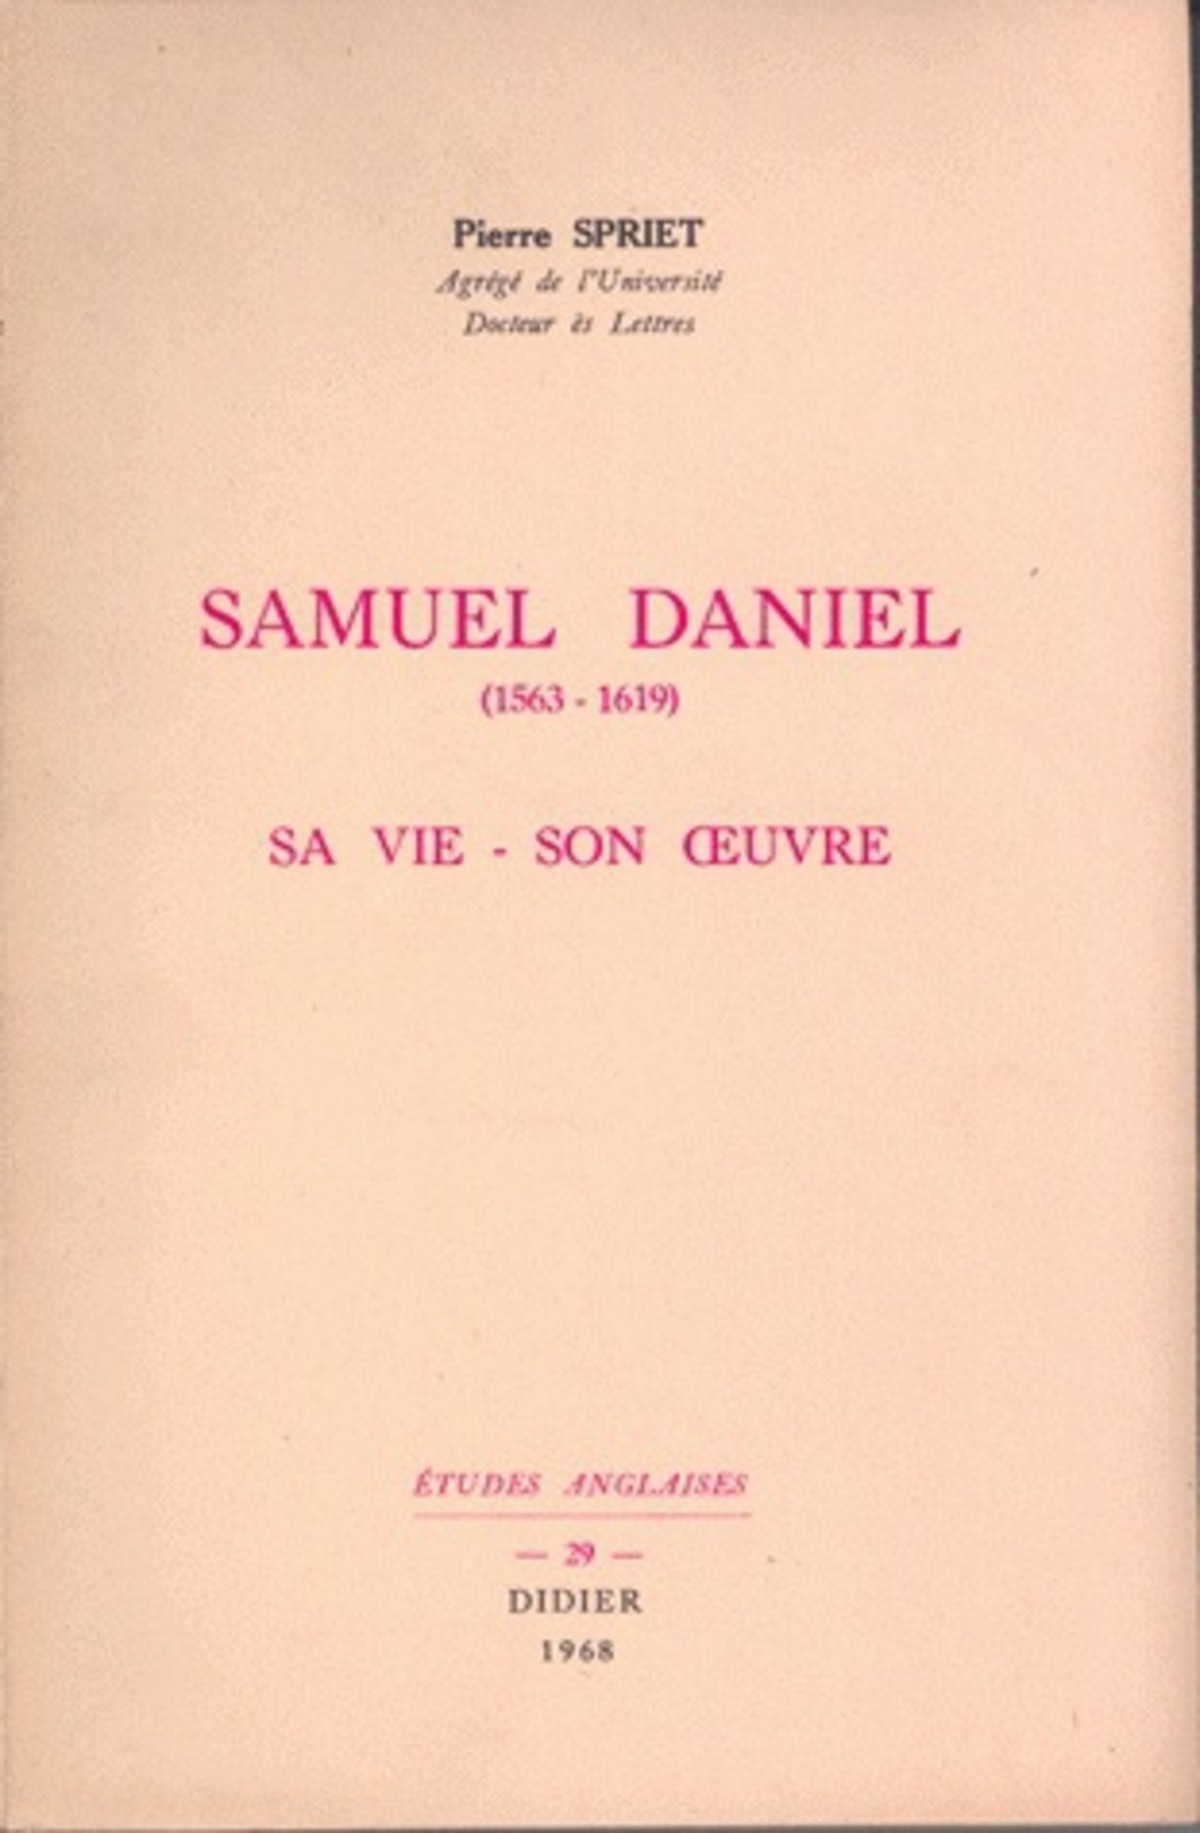 Samuel Daniel (1563-1619)